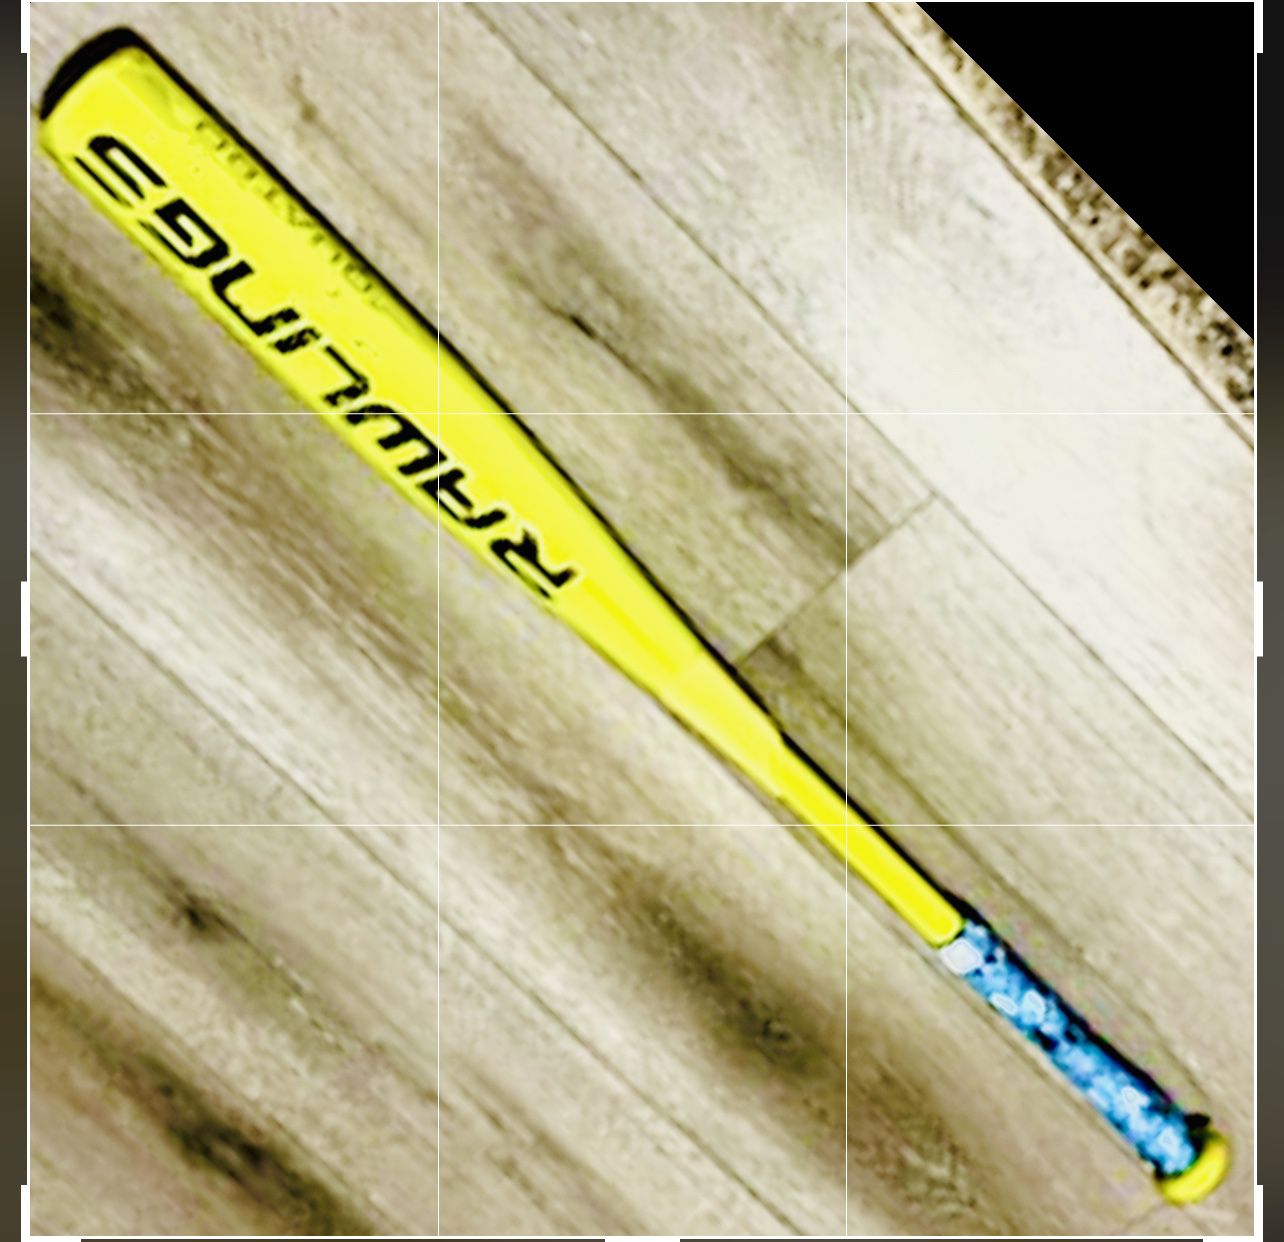 Rawlings Quatro Bbcor Baseball Bat Glow stick